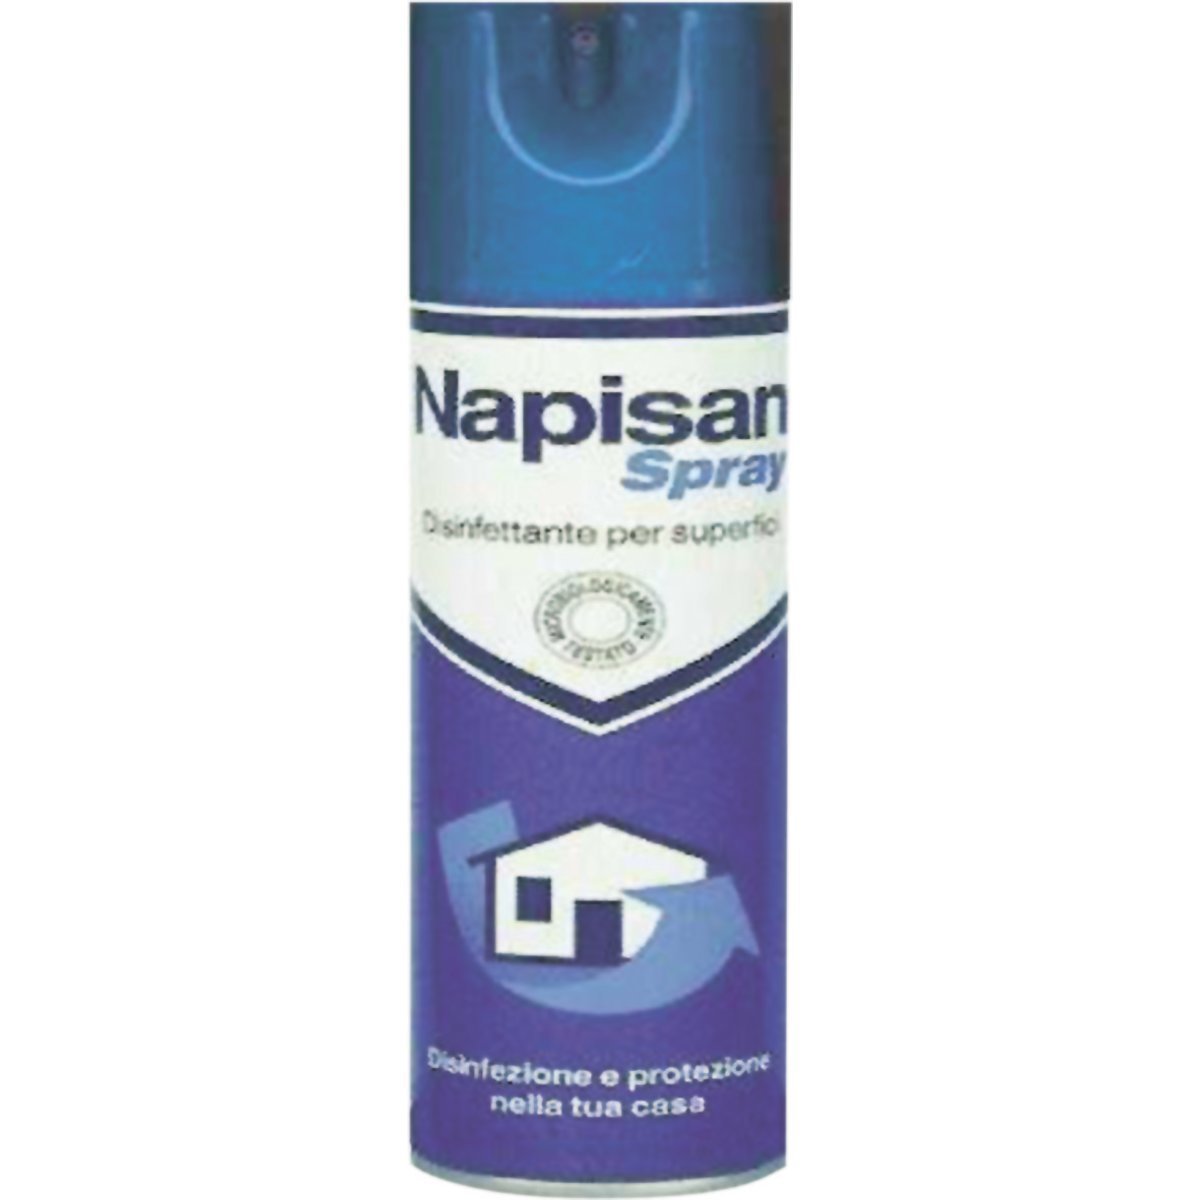 NAPISAN spray LT 0,3000 - Basko